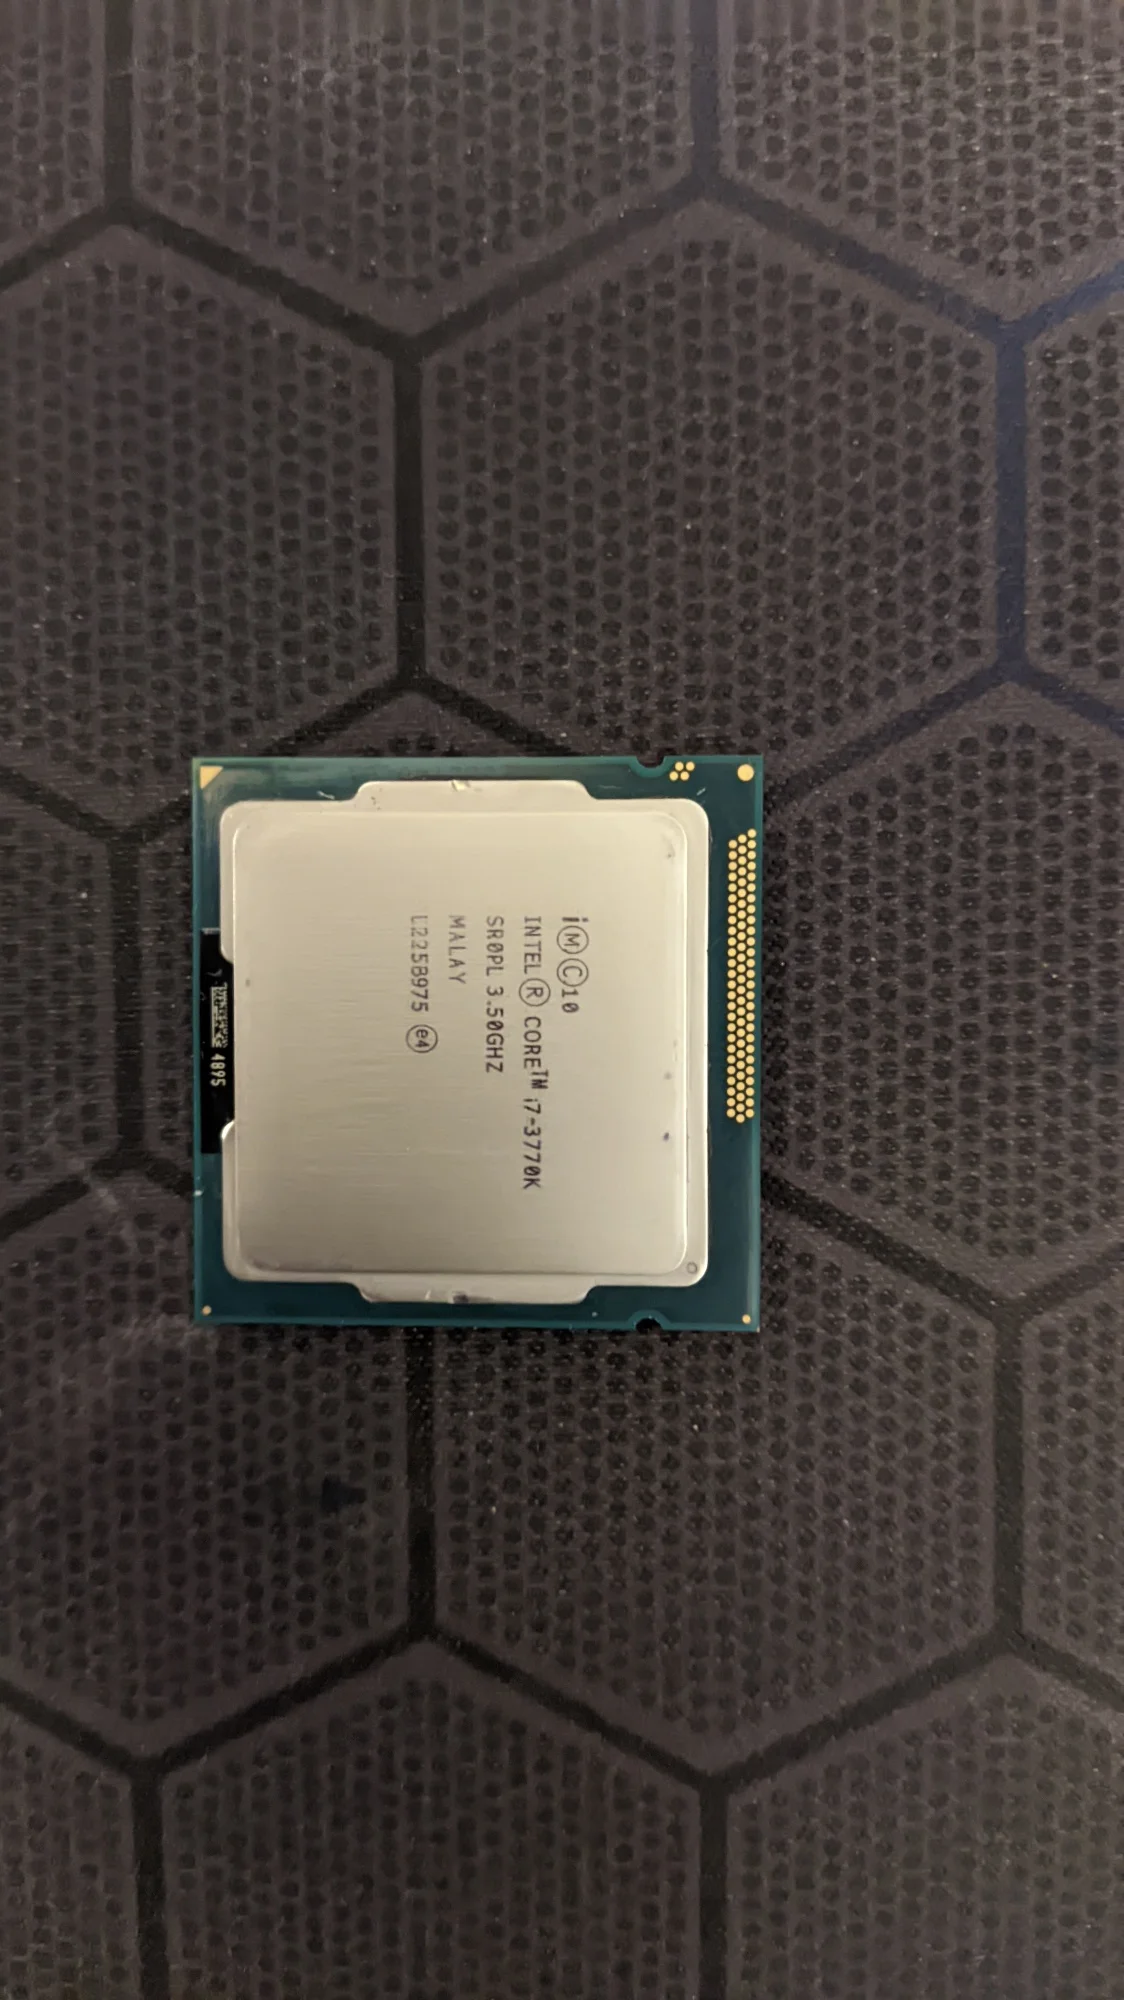 Intel Core i7-3770K i7 3770K 3.5 GHz Quad-Core CPU Processor 8M 77W LGA 1155 photo review